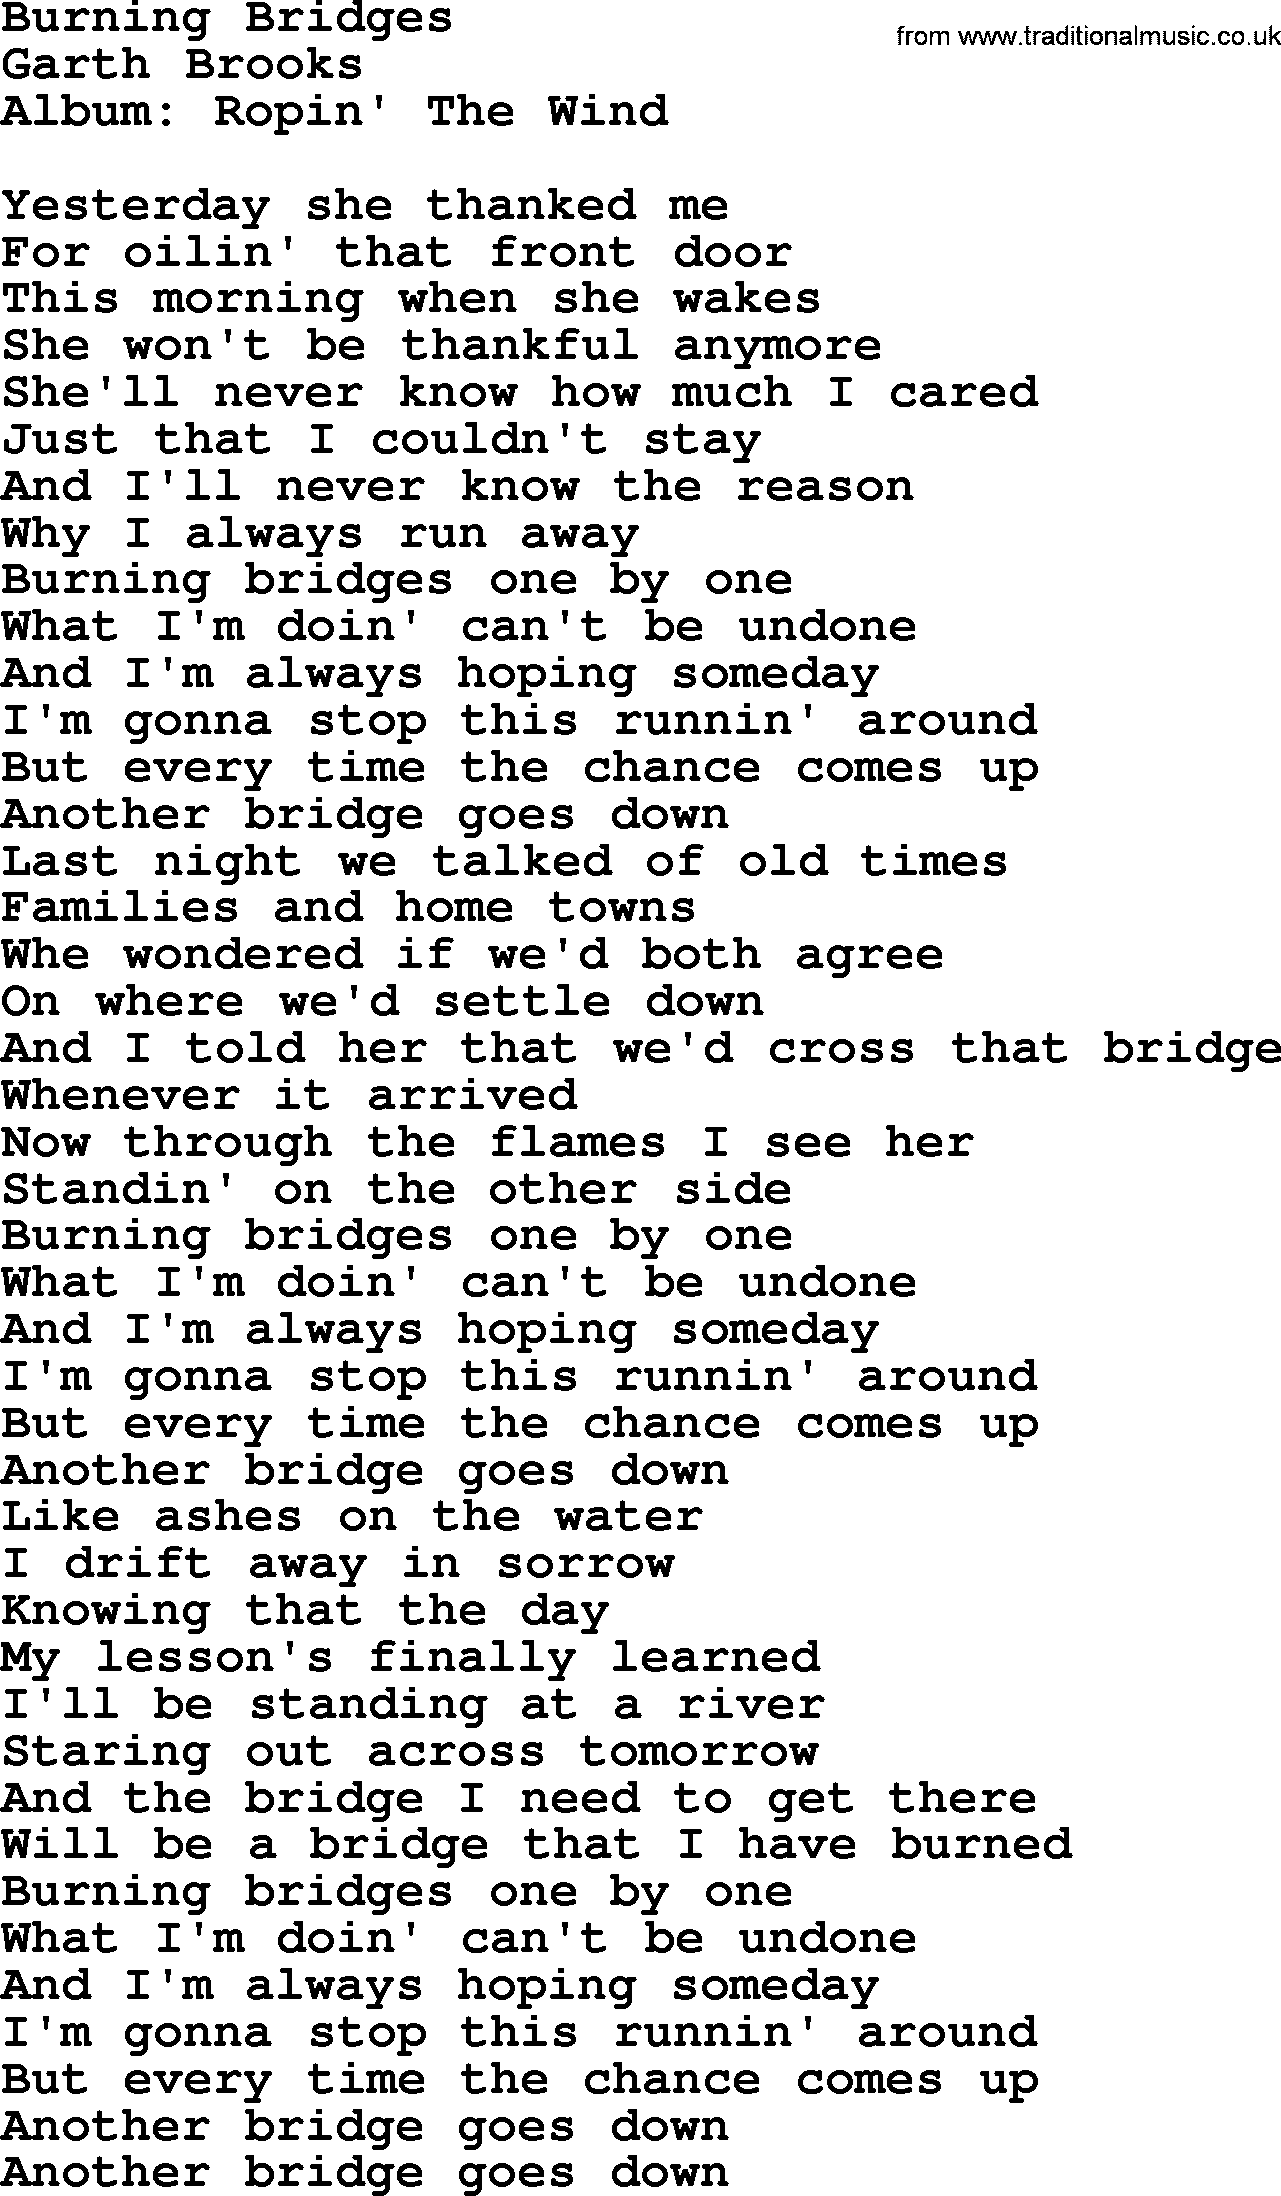 Garth Brooks song: Burning Bridges, lyrics